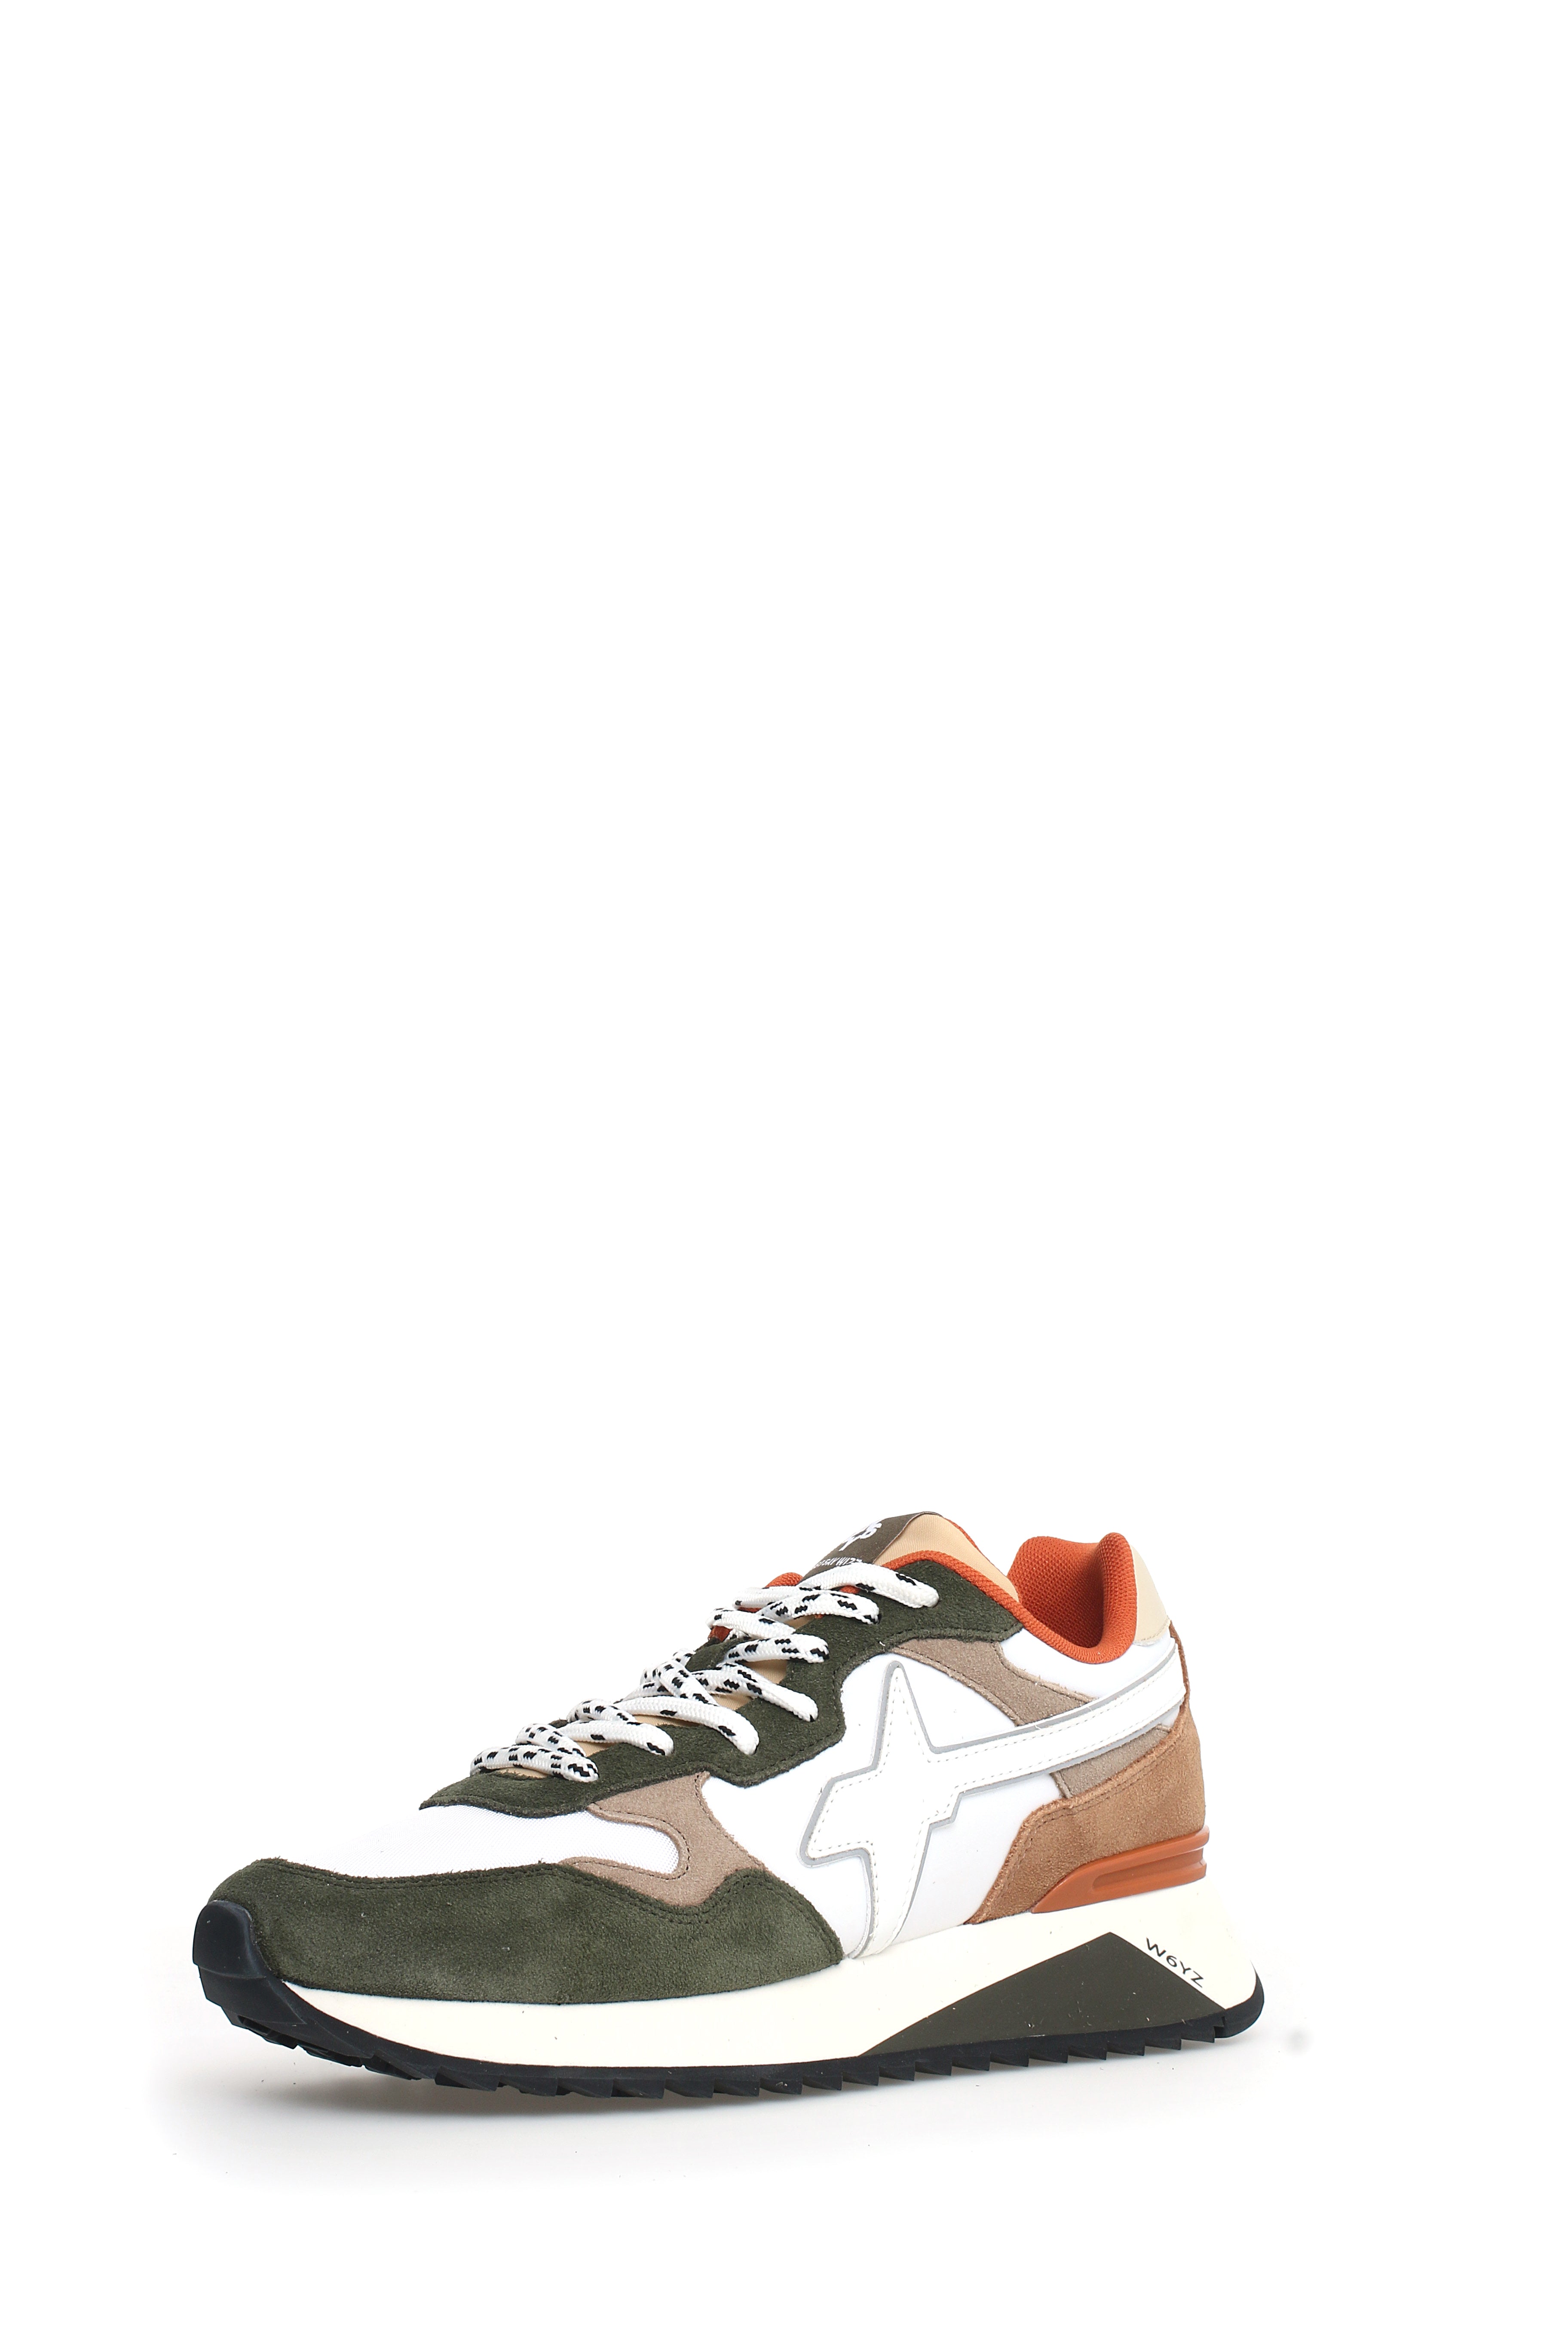 W6YZ-Sneaker Uomo Yak M-Militare White Brown